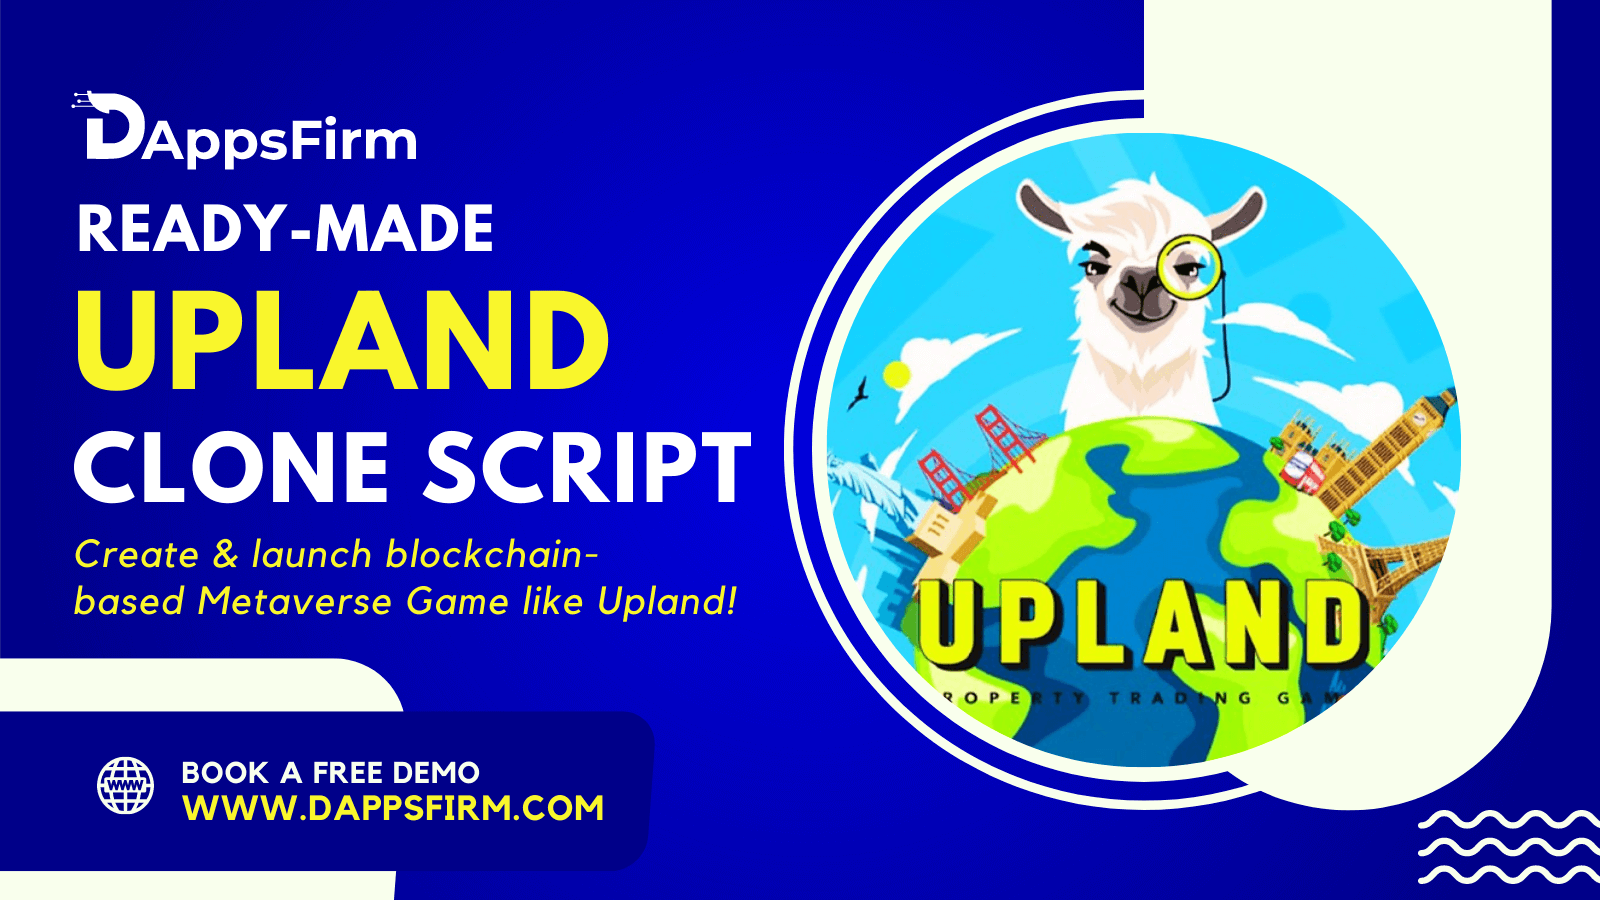 Upland Clone Script To Create Metaverse Virtual Land Platform Like Upland